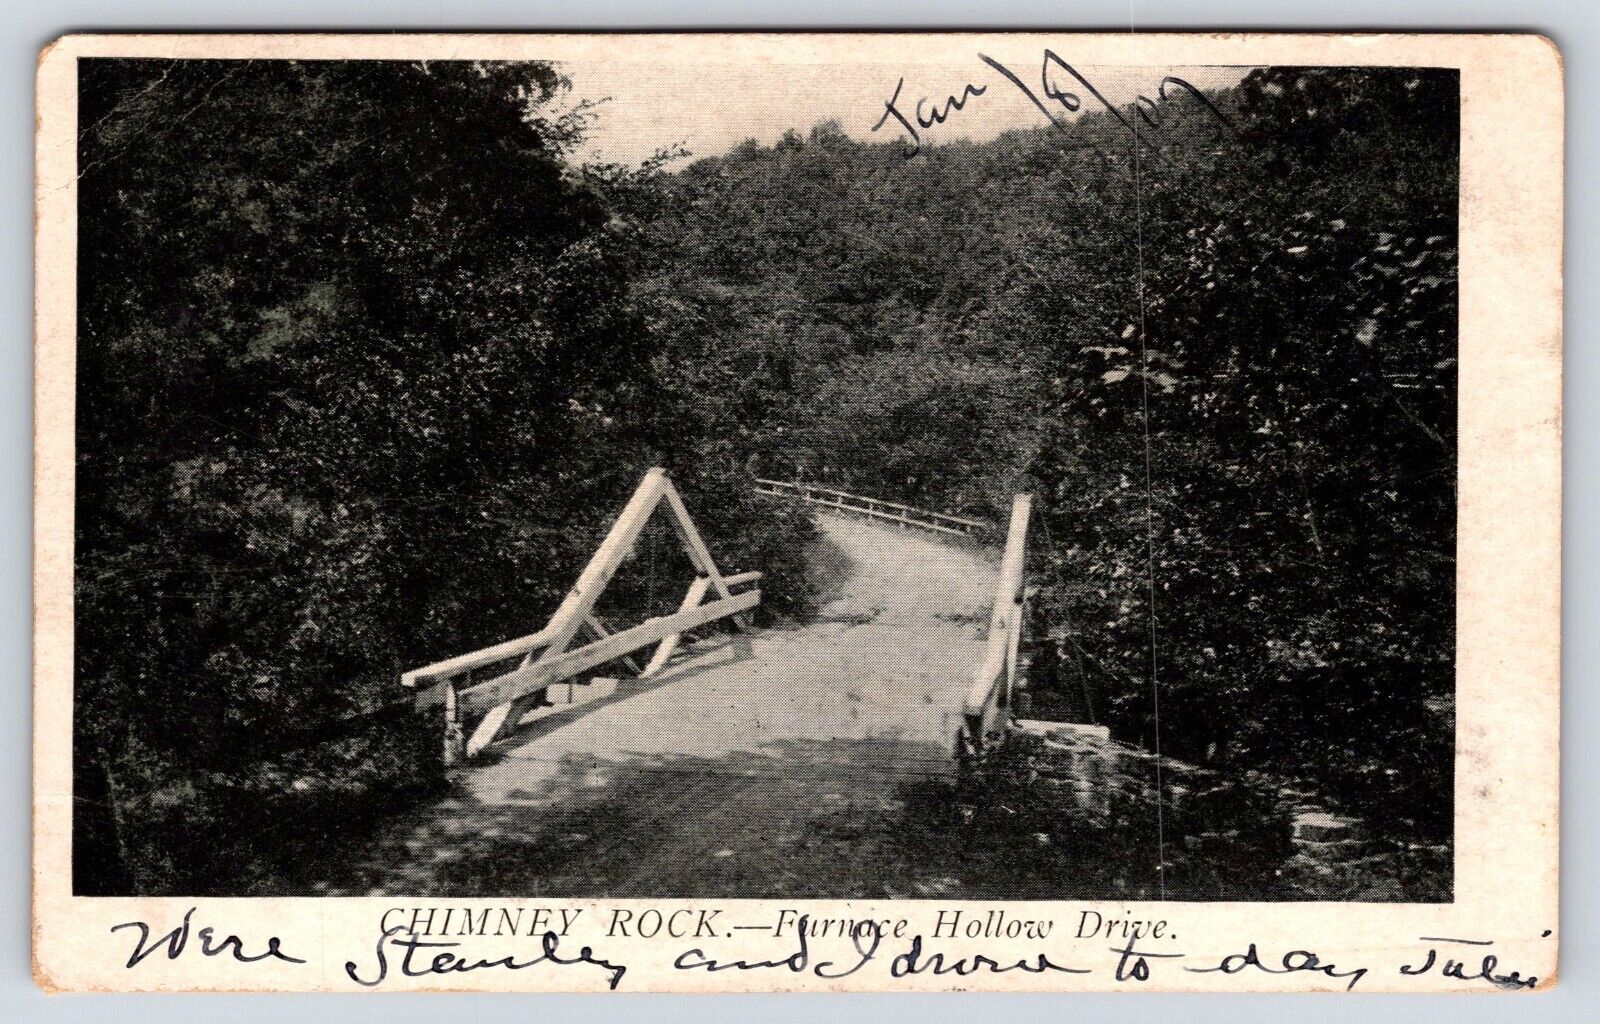 North Carolina Chimney Rock Furnace Hollow Drive Vintage Postcard POSTED 1907